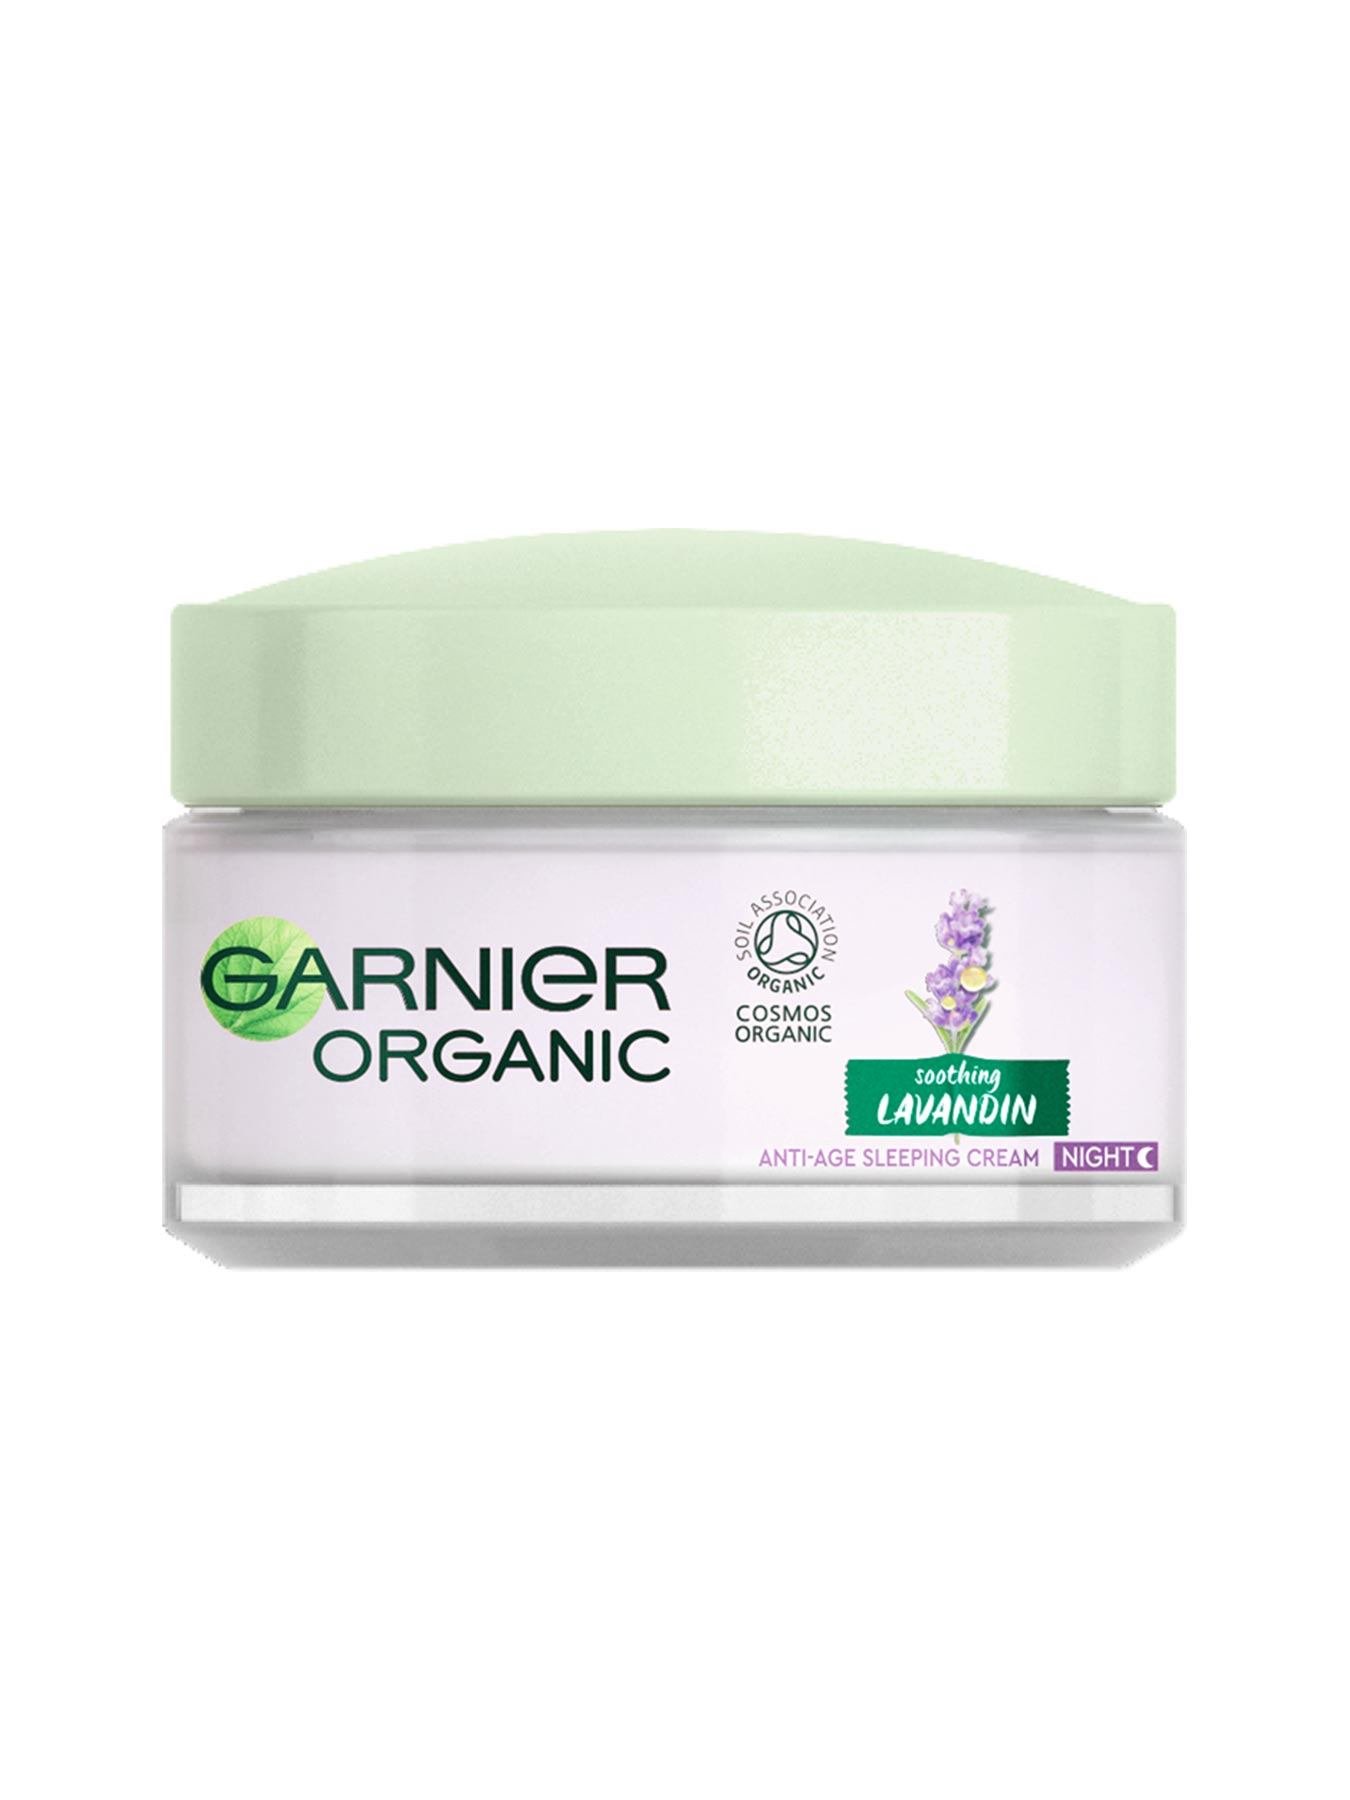 Garnier Organic Lavandin Cream